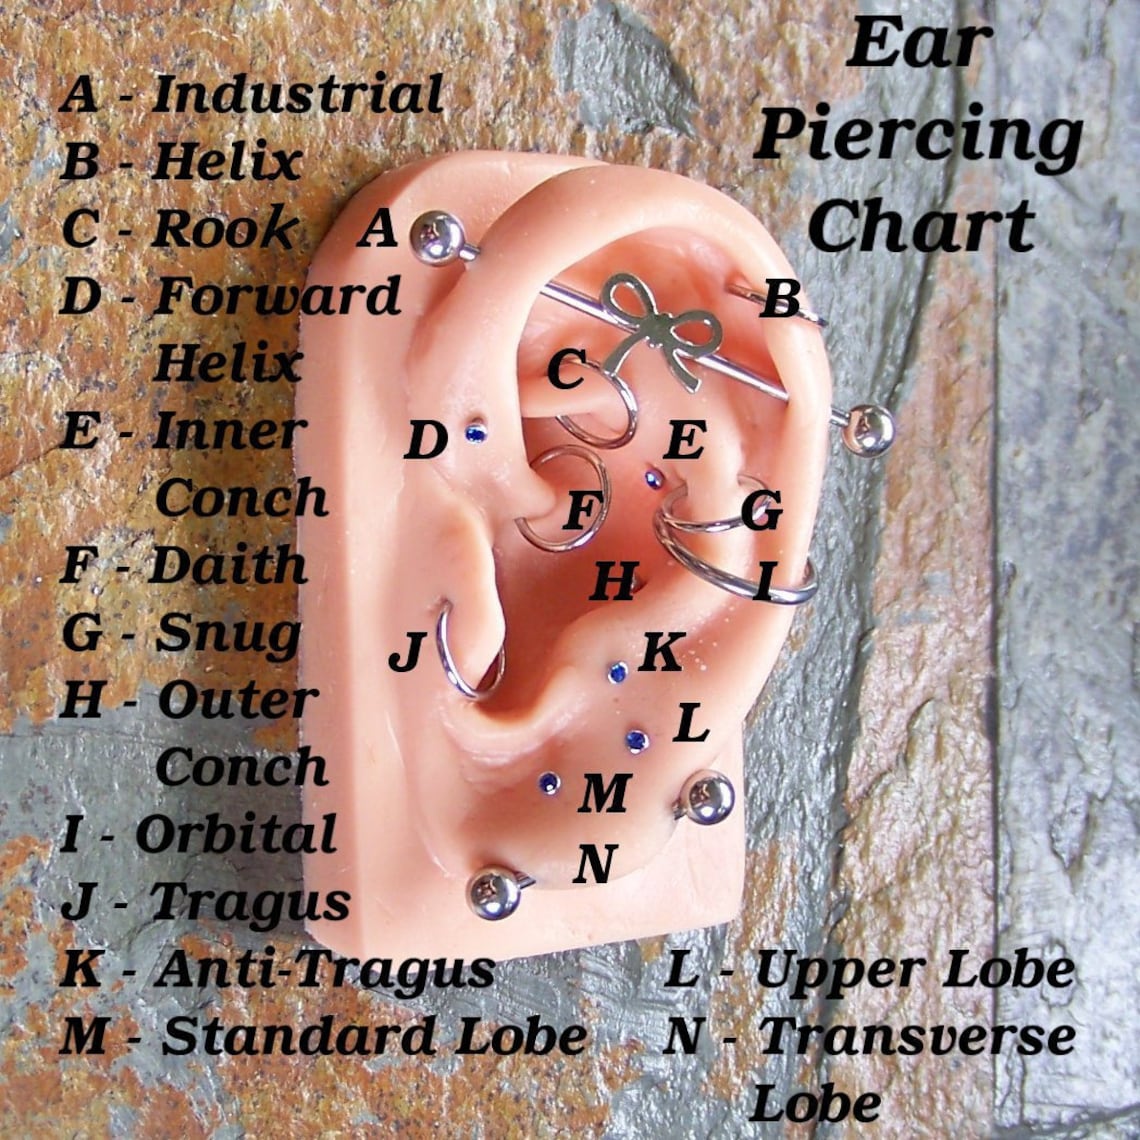 Daith Piercing Chart